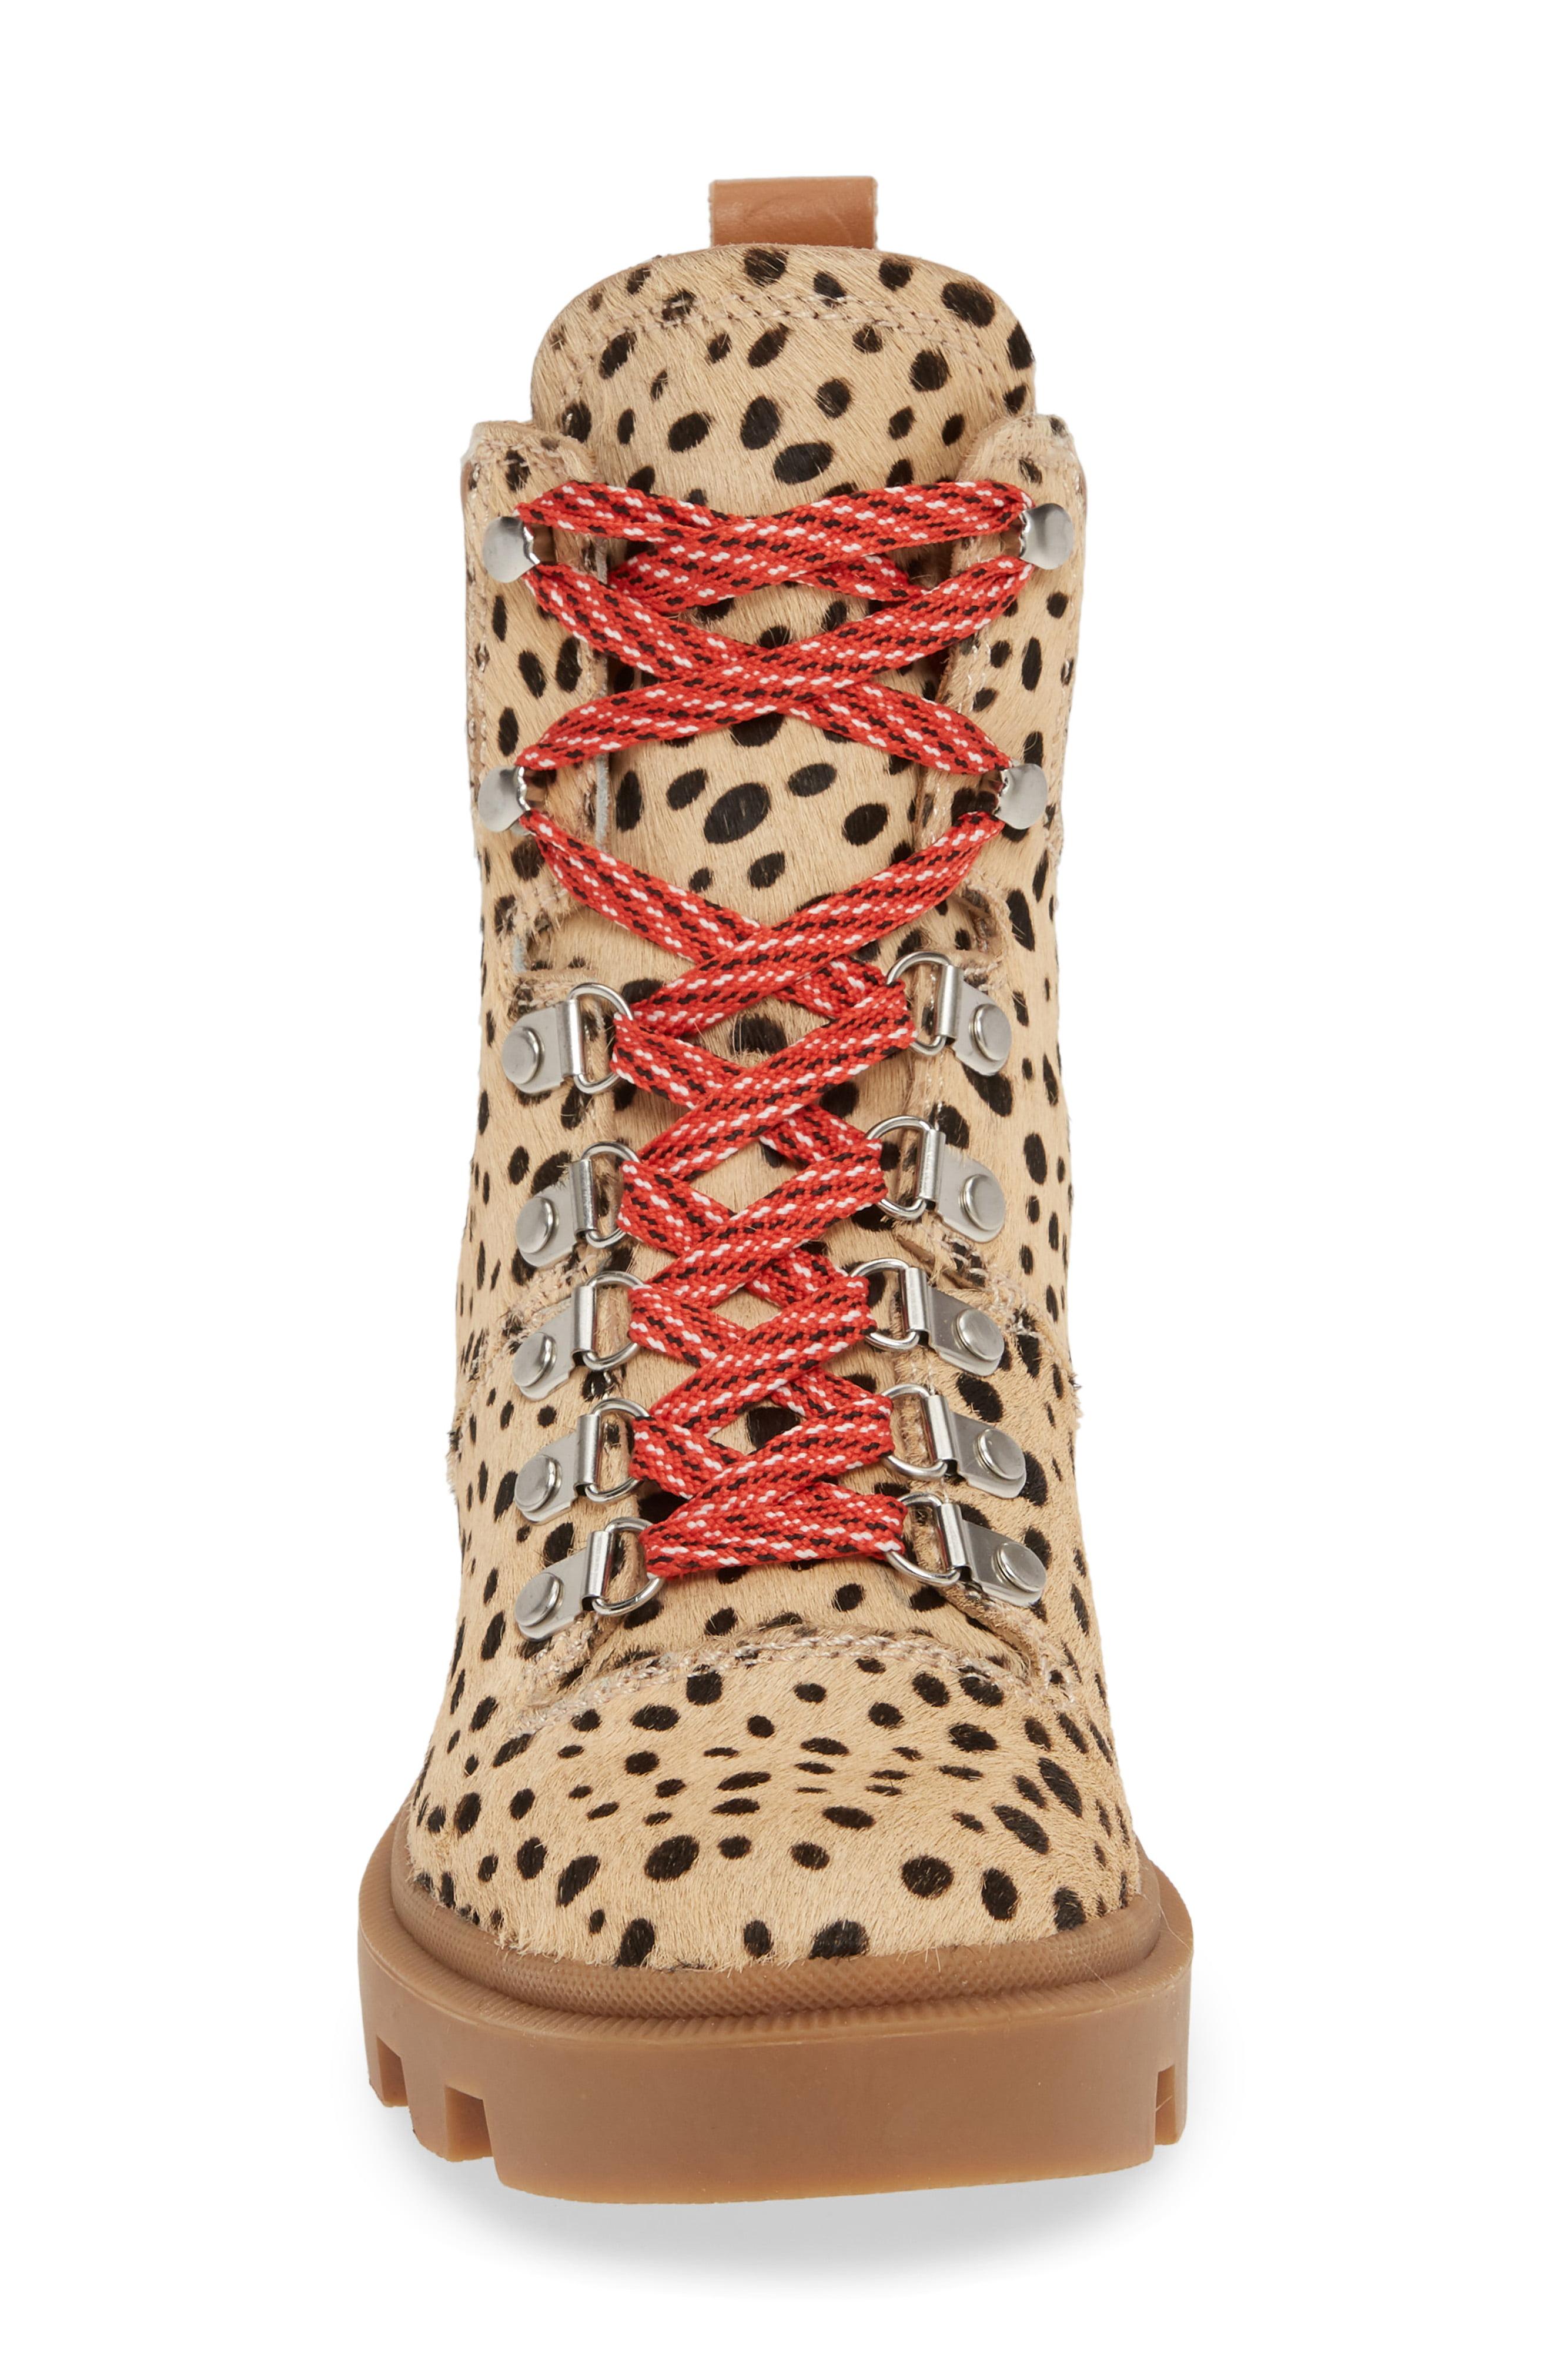 Dolce Vita Leather Women's Rubi Cheetah Print Hiker Booties in Brown - Lyst